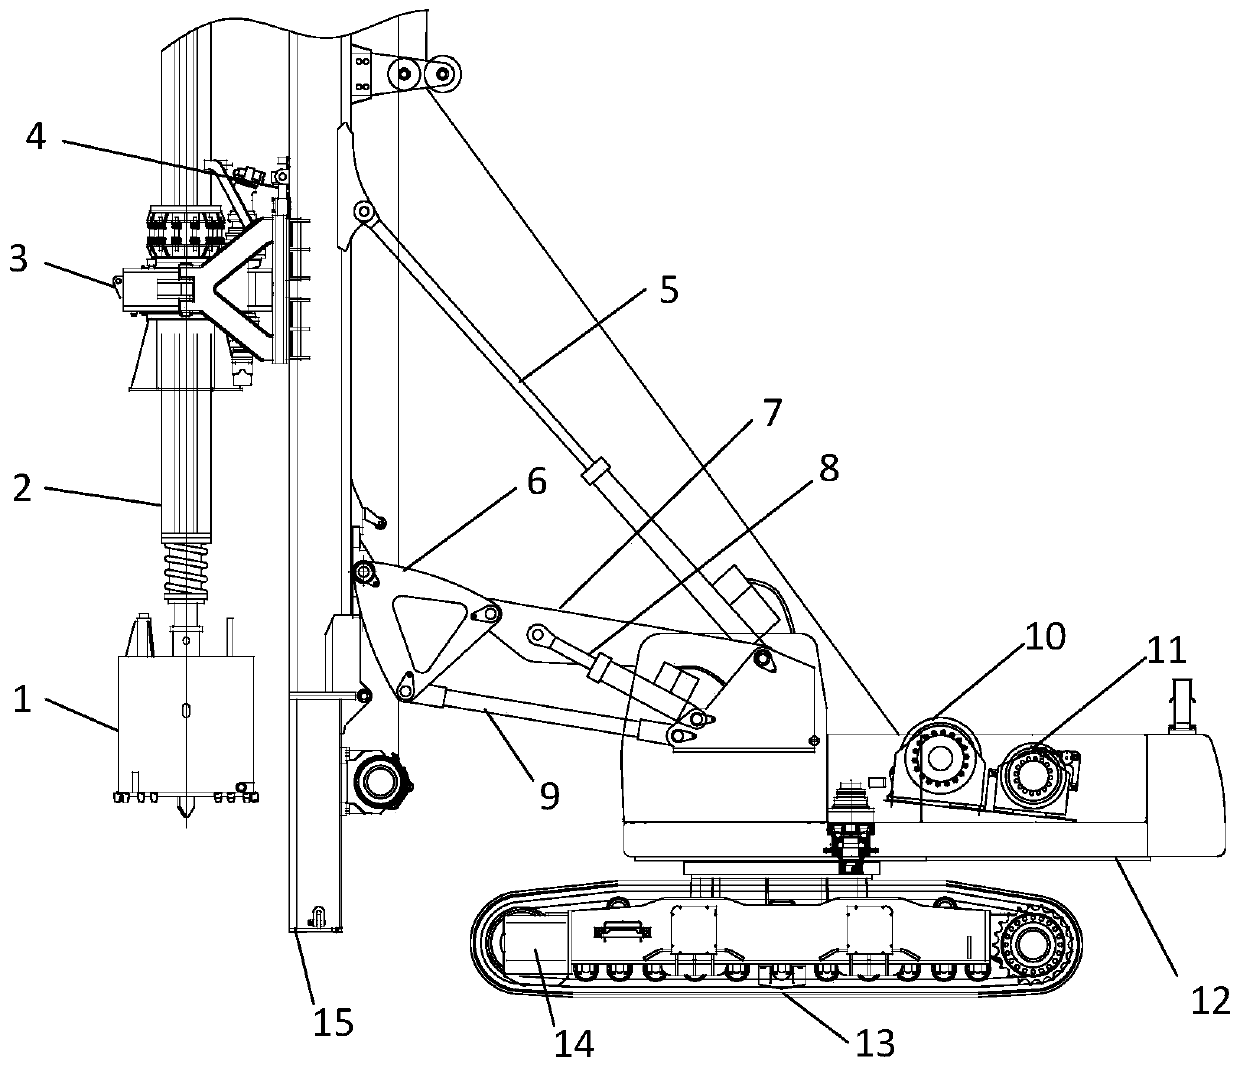 A hydraulic-electric hybrid drive rotary drilling rig